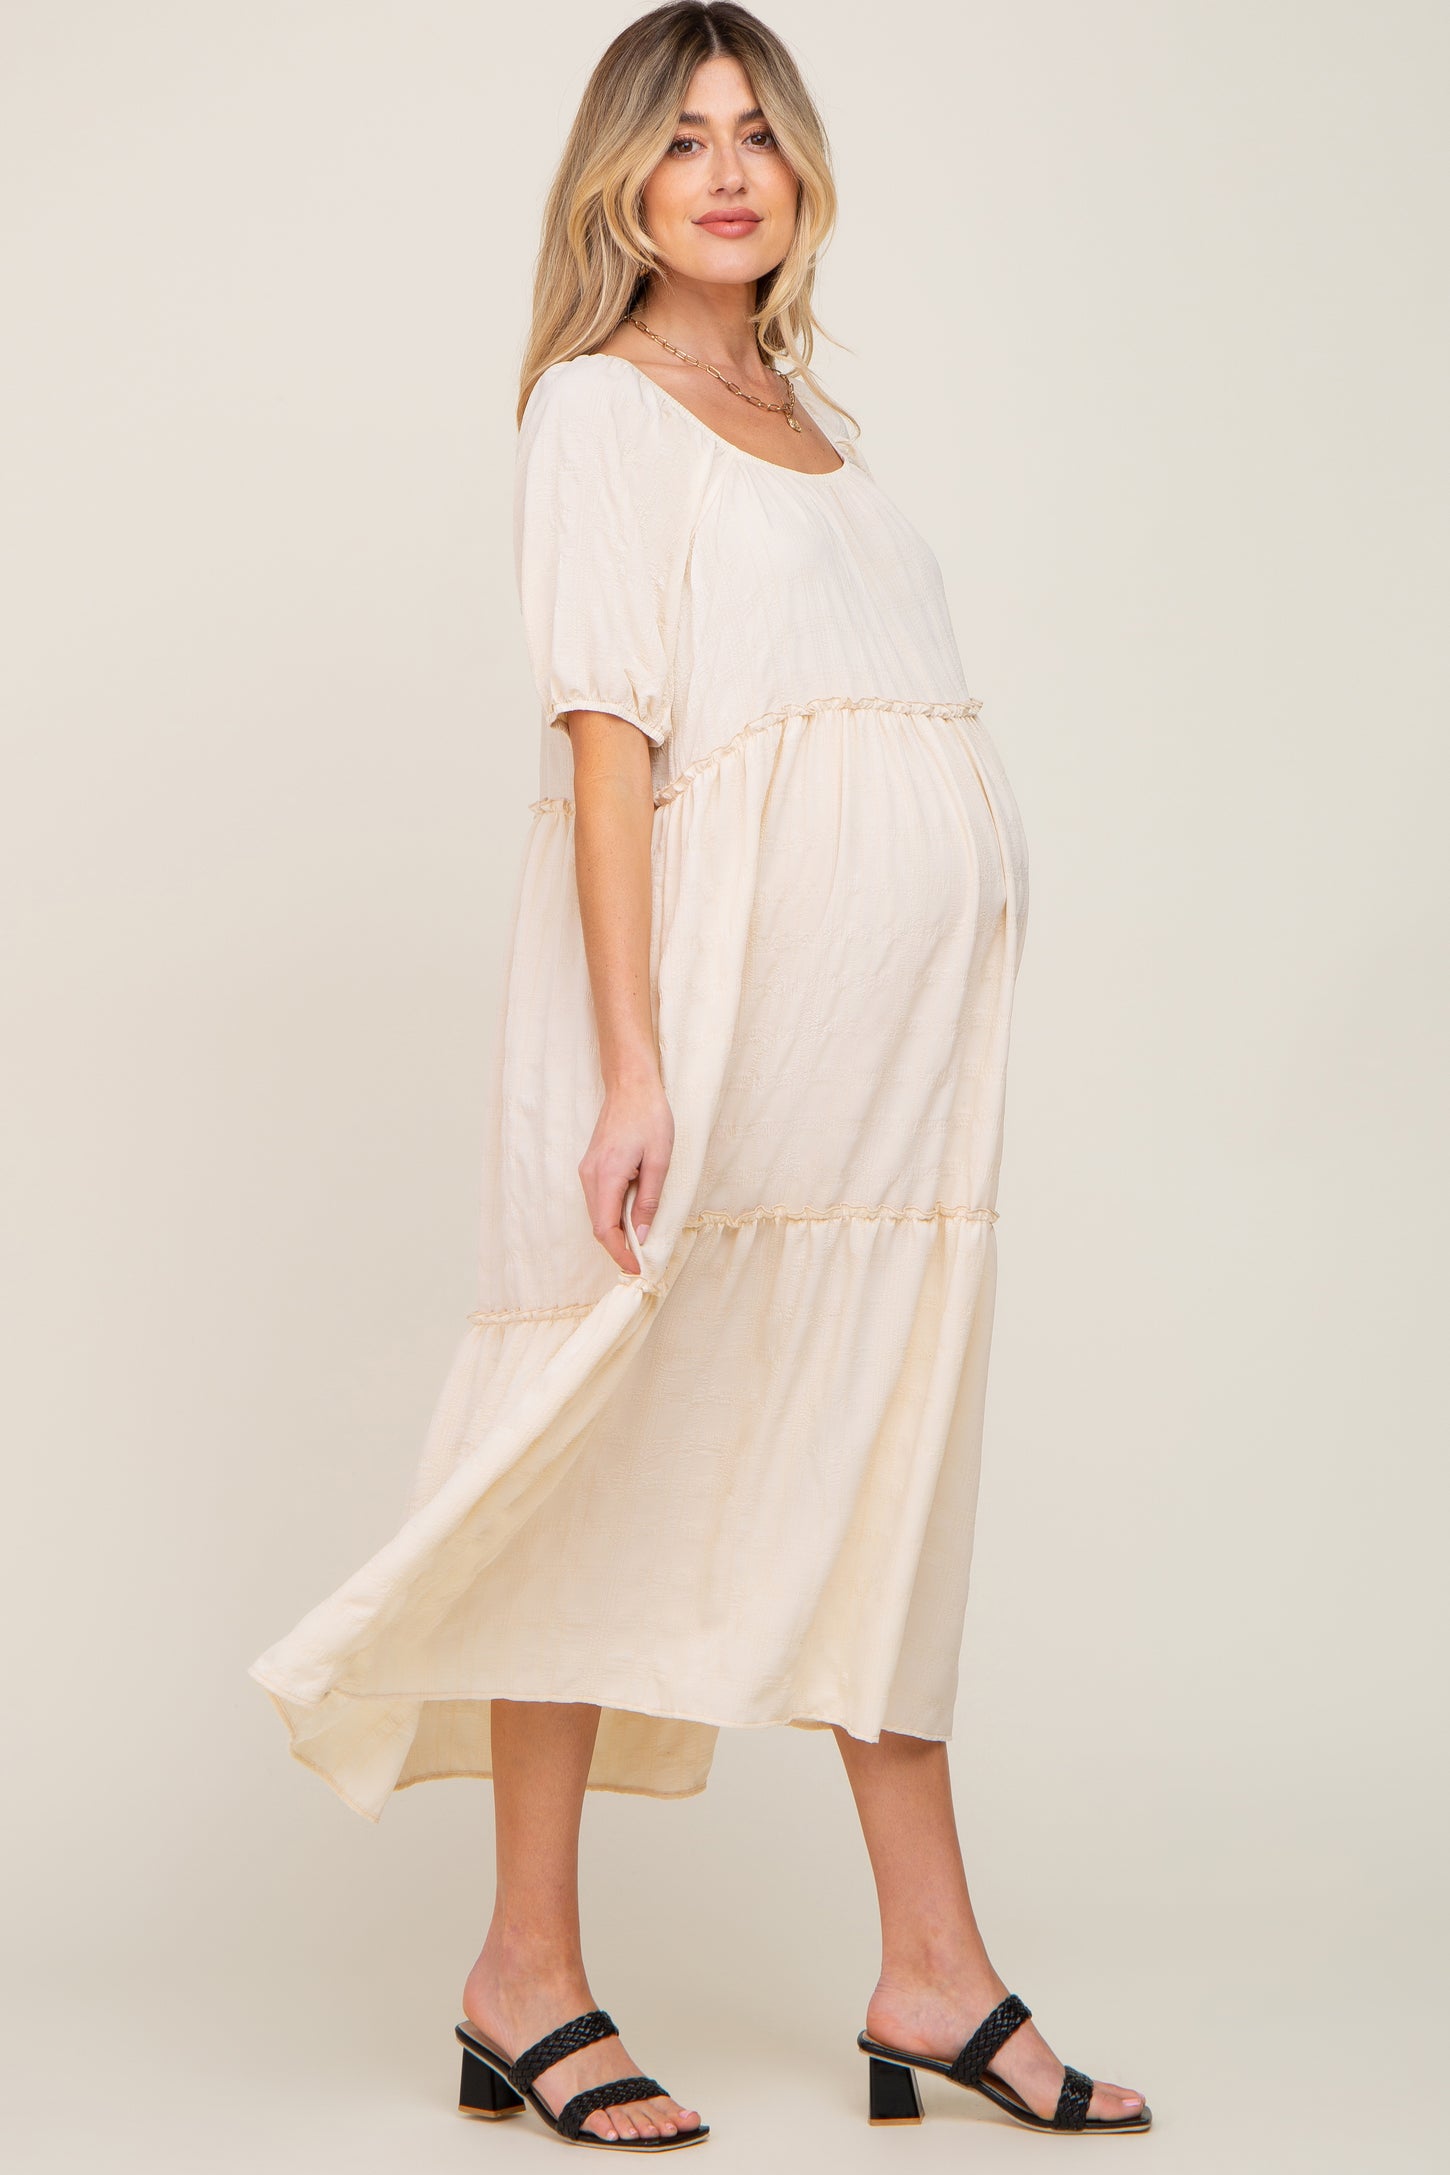 High Waisted Maternity Skirt by Rachel Pally for $30